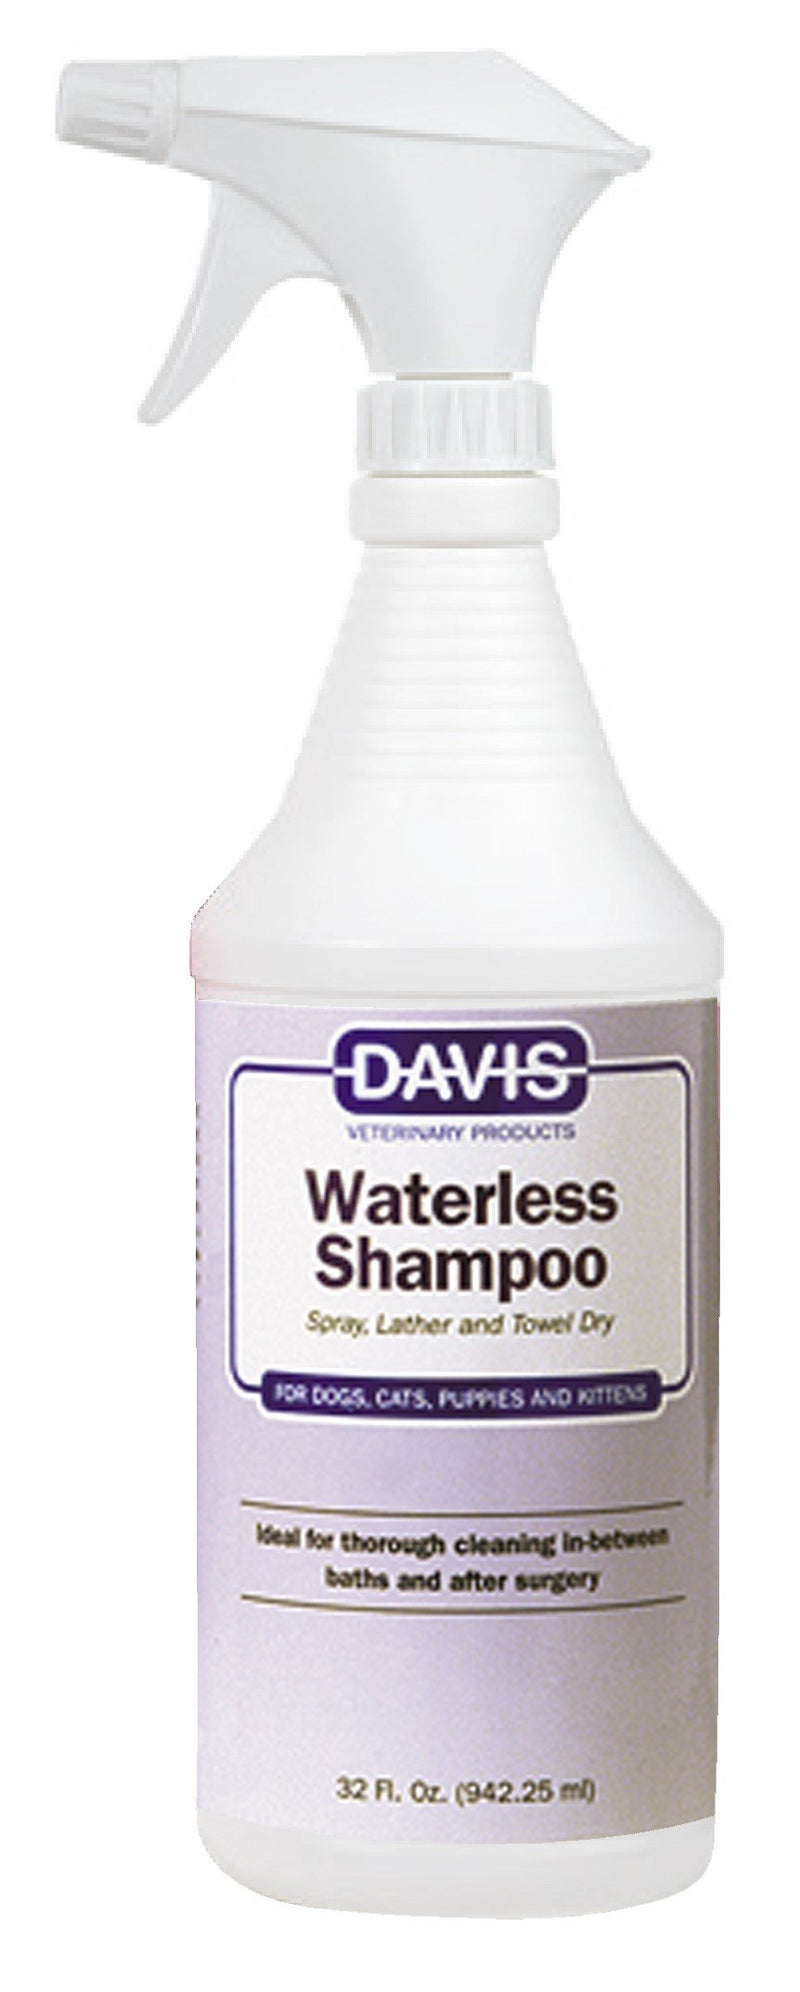 [Australia] - Davis Waterless Pet Shampoo Spray, 32 oz 